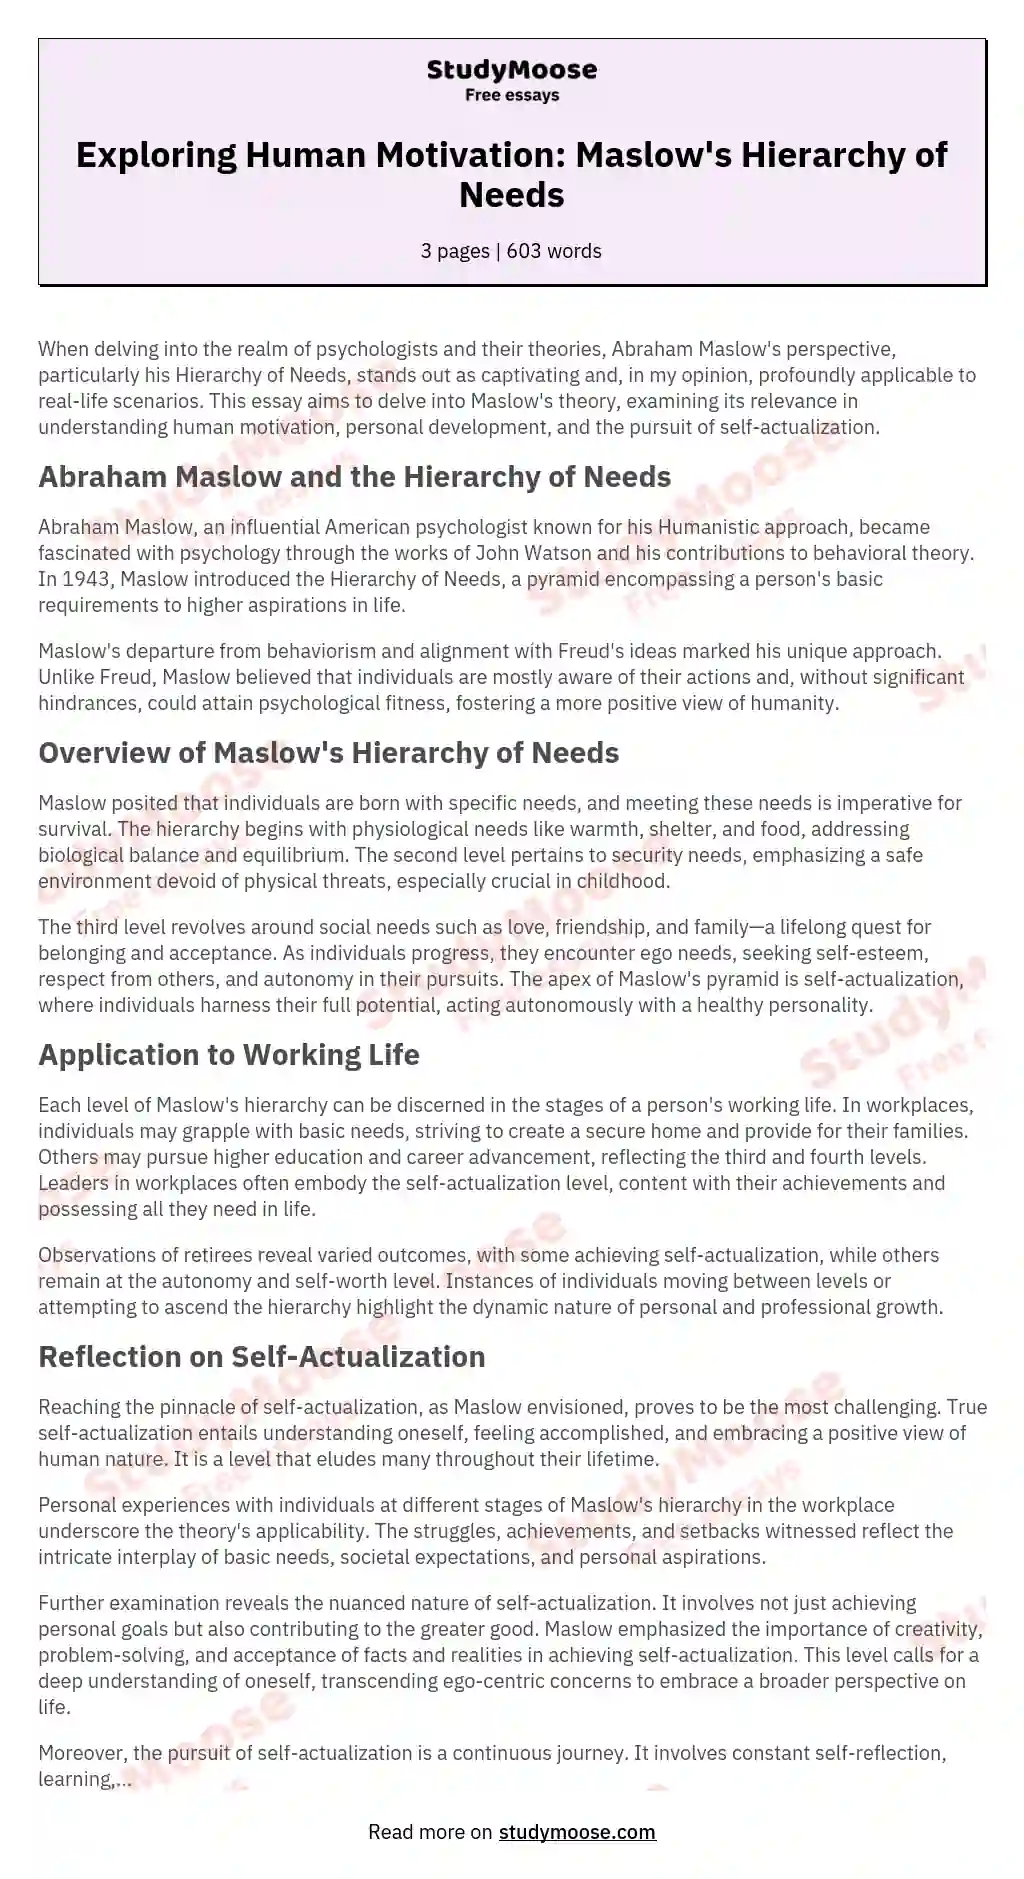 Maslow's Hierarchy of Needs: Understanding Human Motivation essay